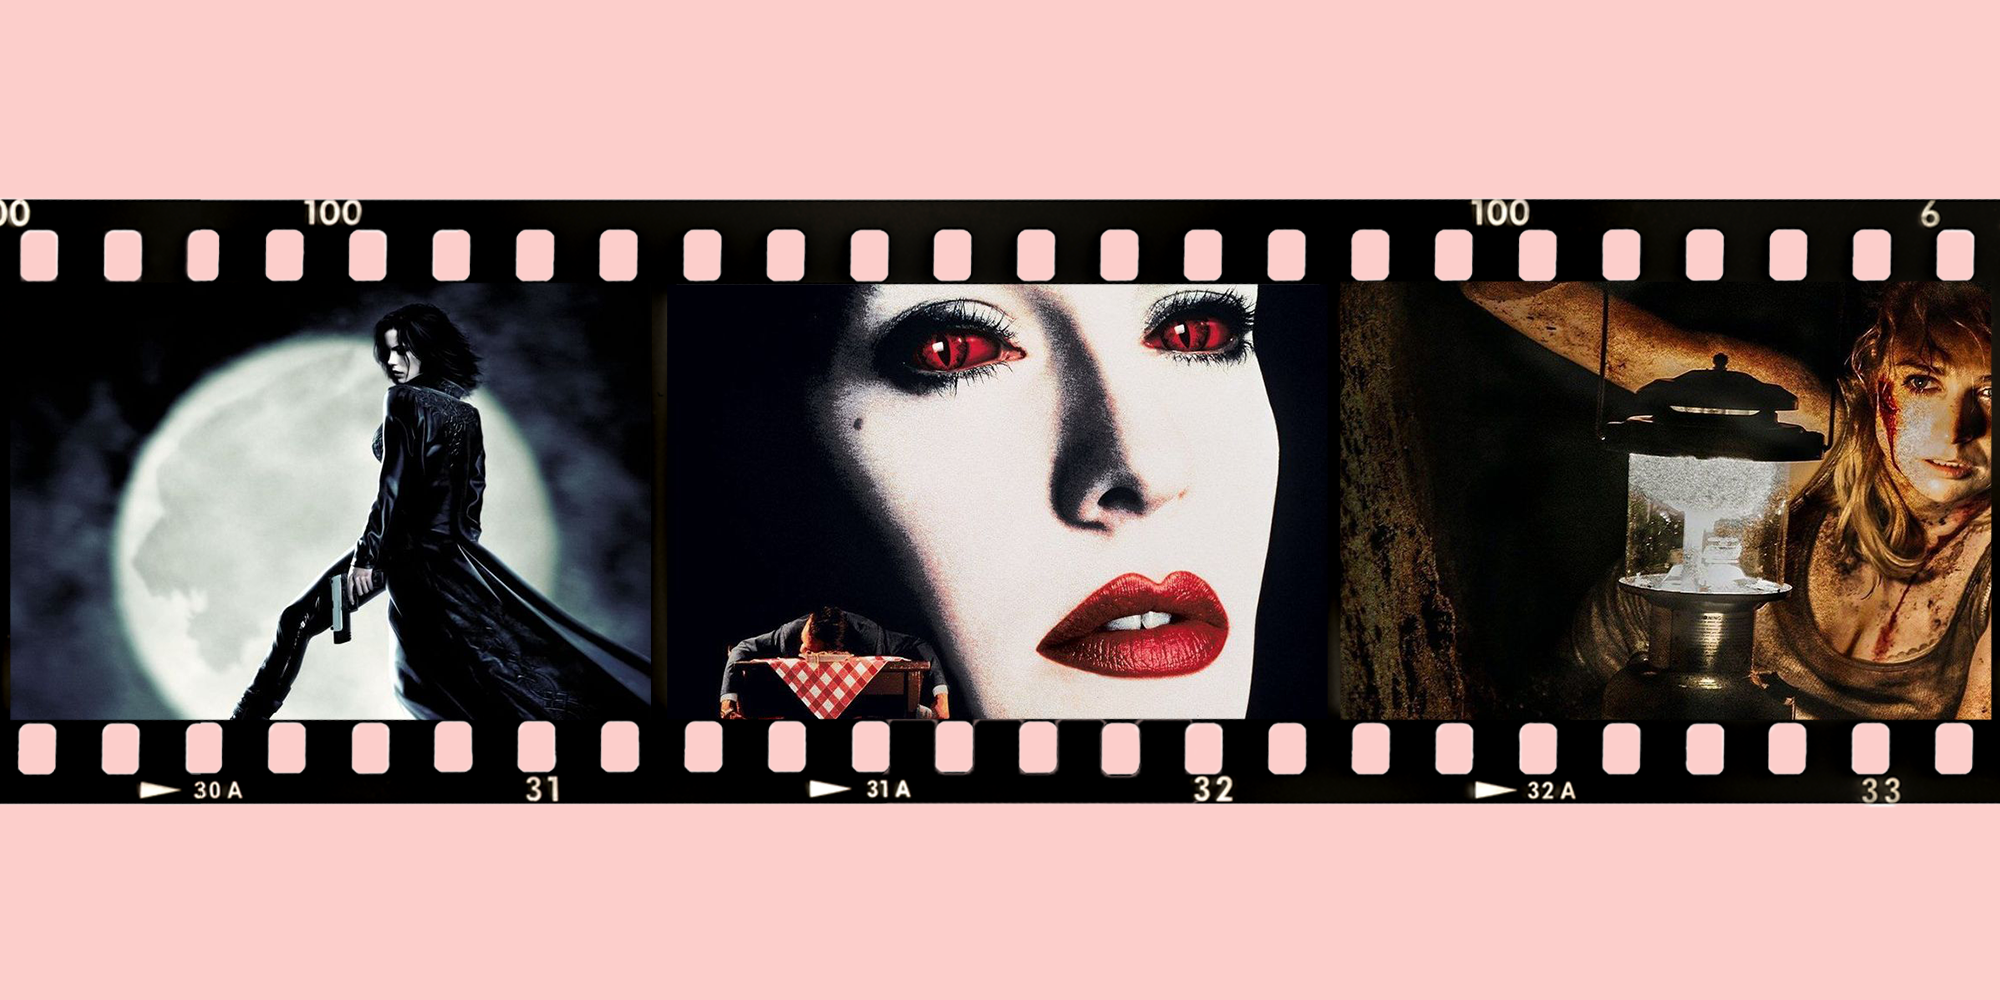 Vampire Full Movies On Youtube